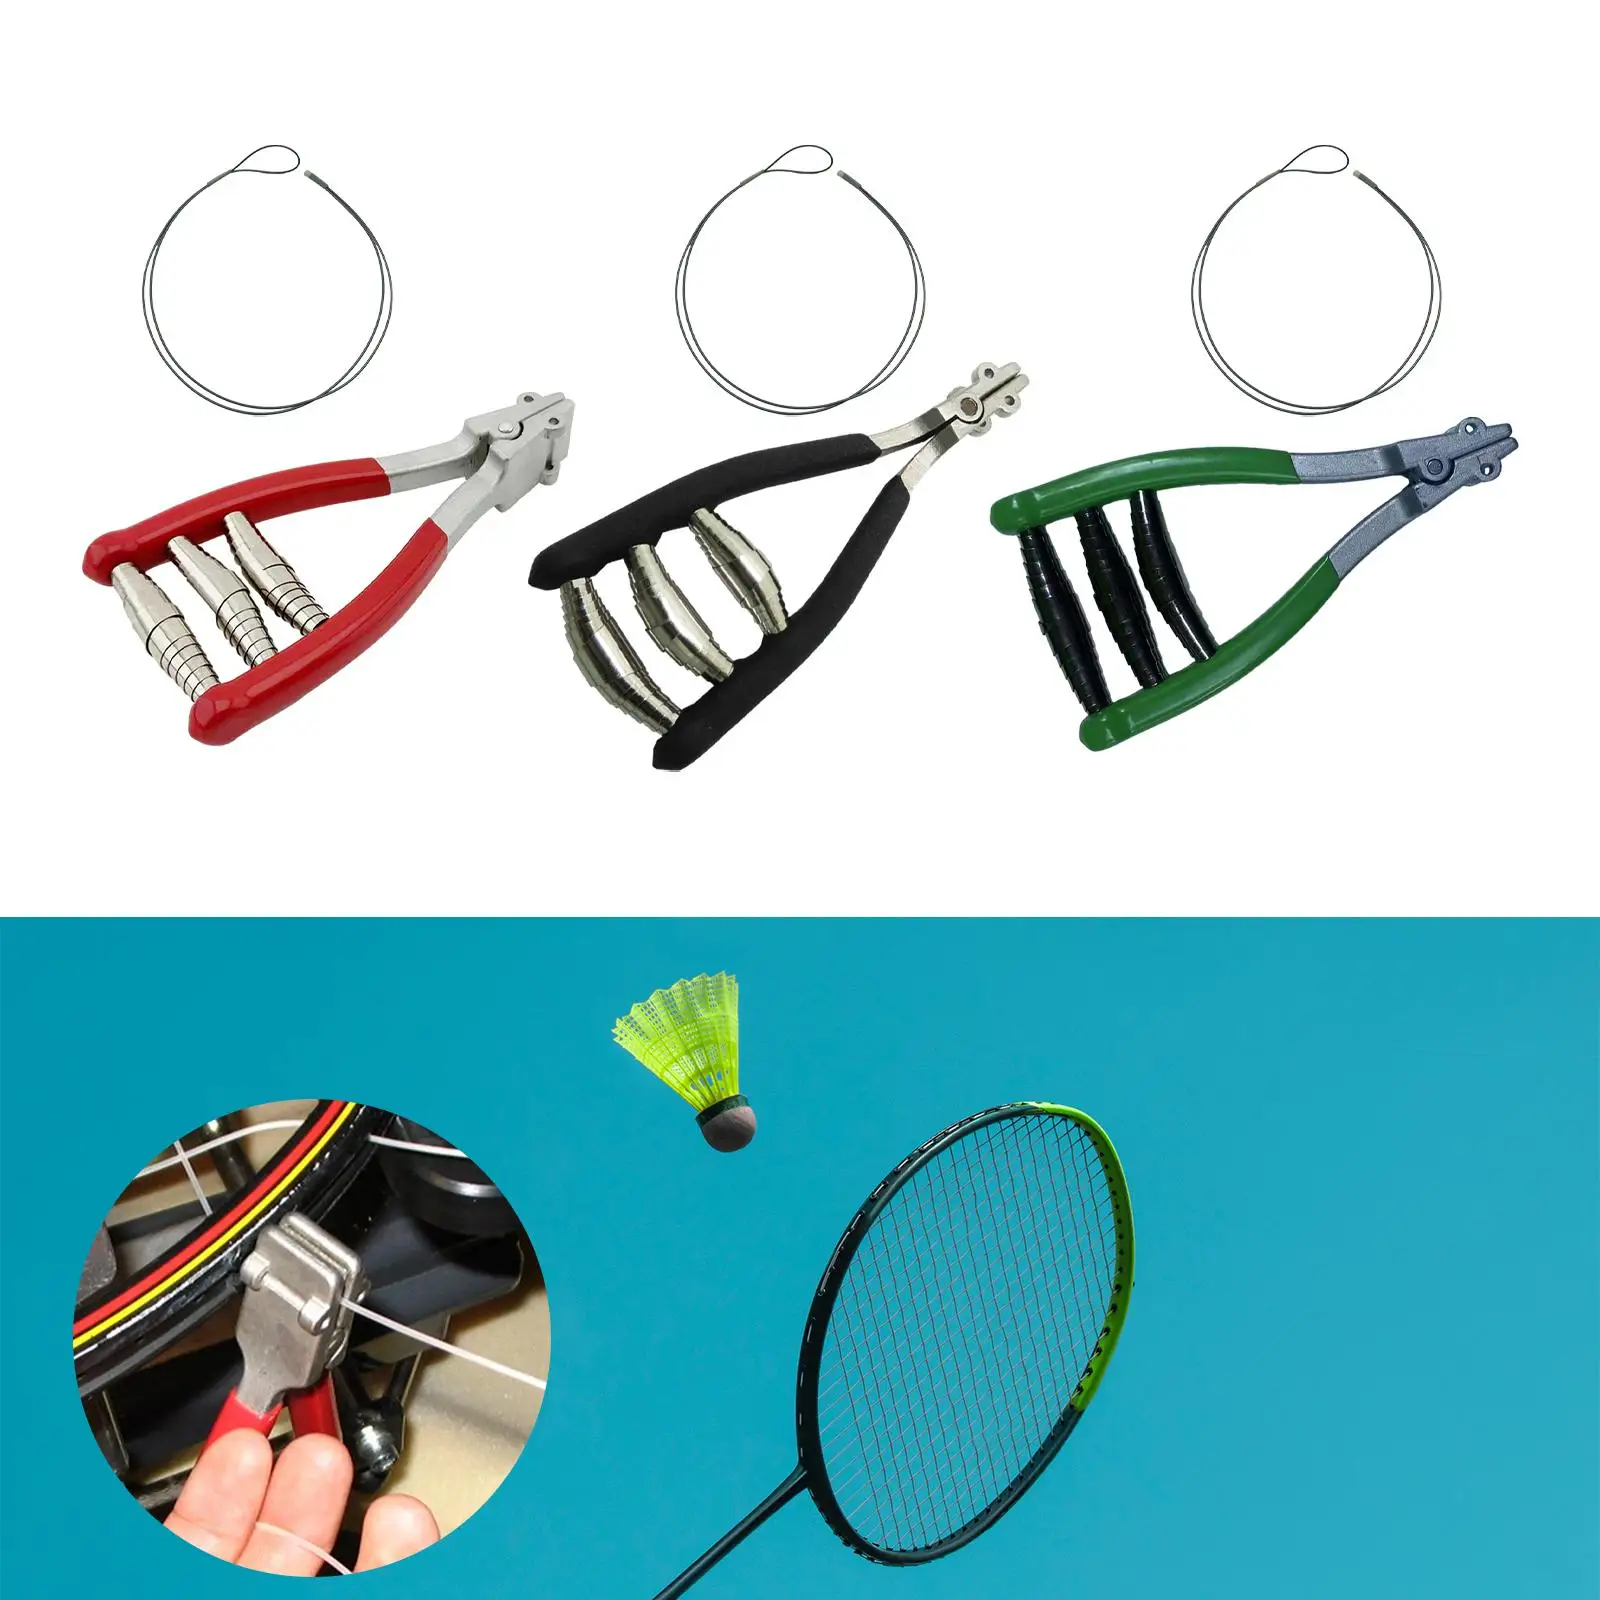 String Starting Clamp Stringing Clamp for Squash Tennis Badminton Racket